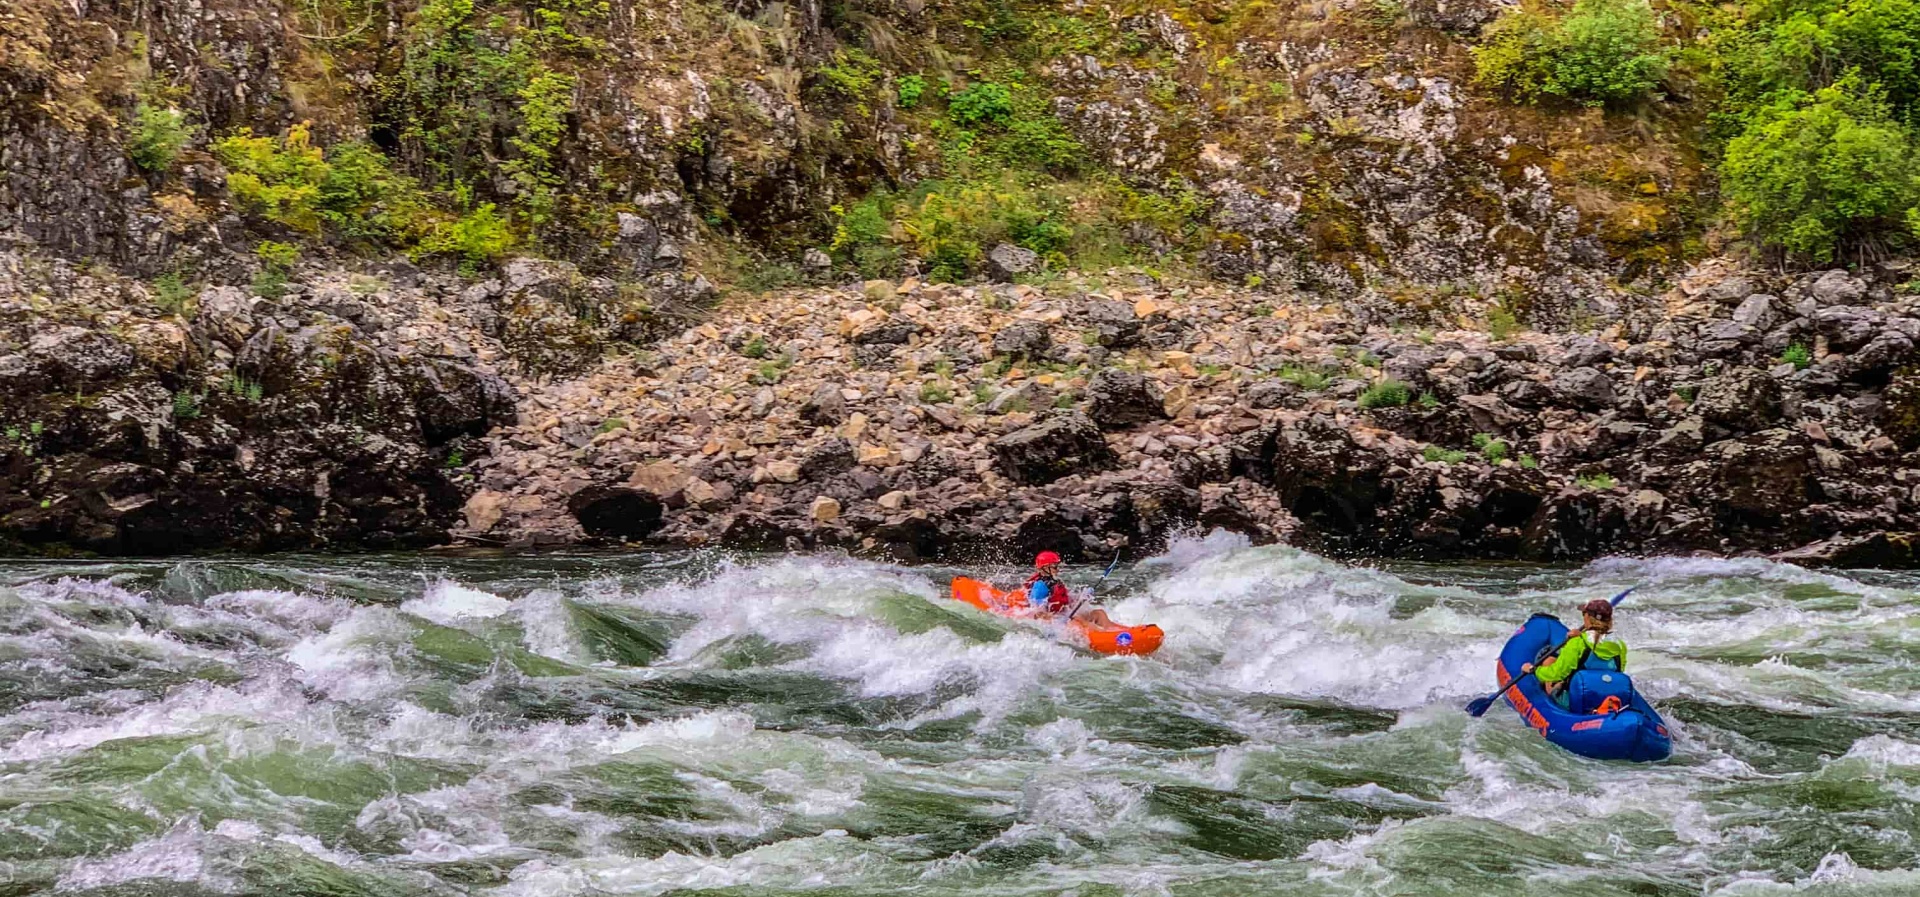 Kayaking rapids on the Salmon River 2-day